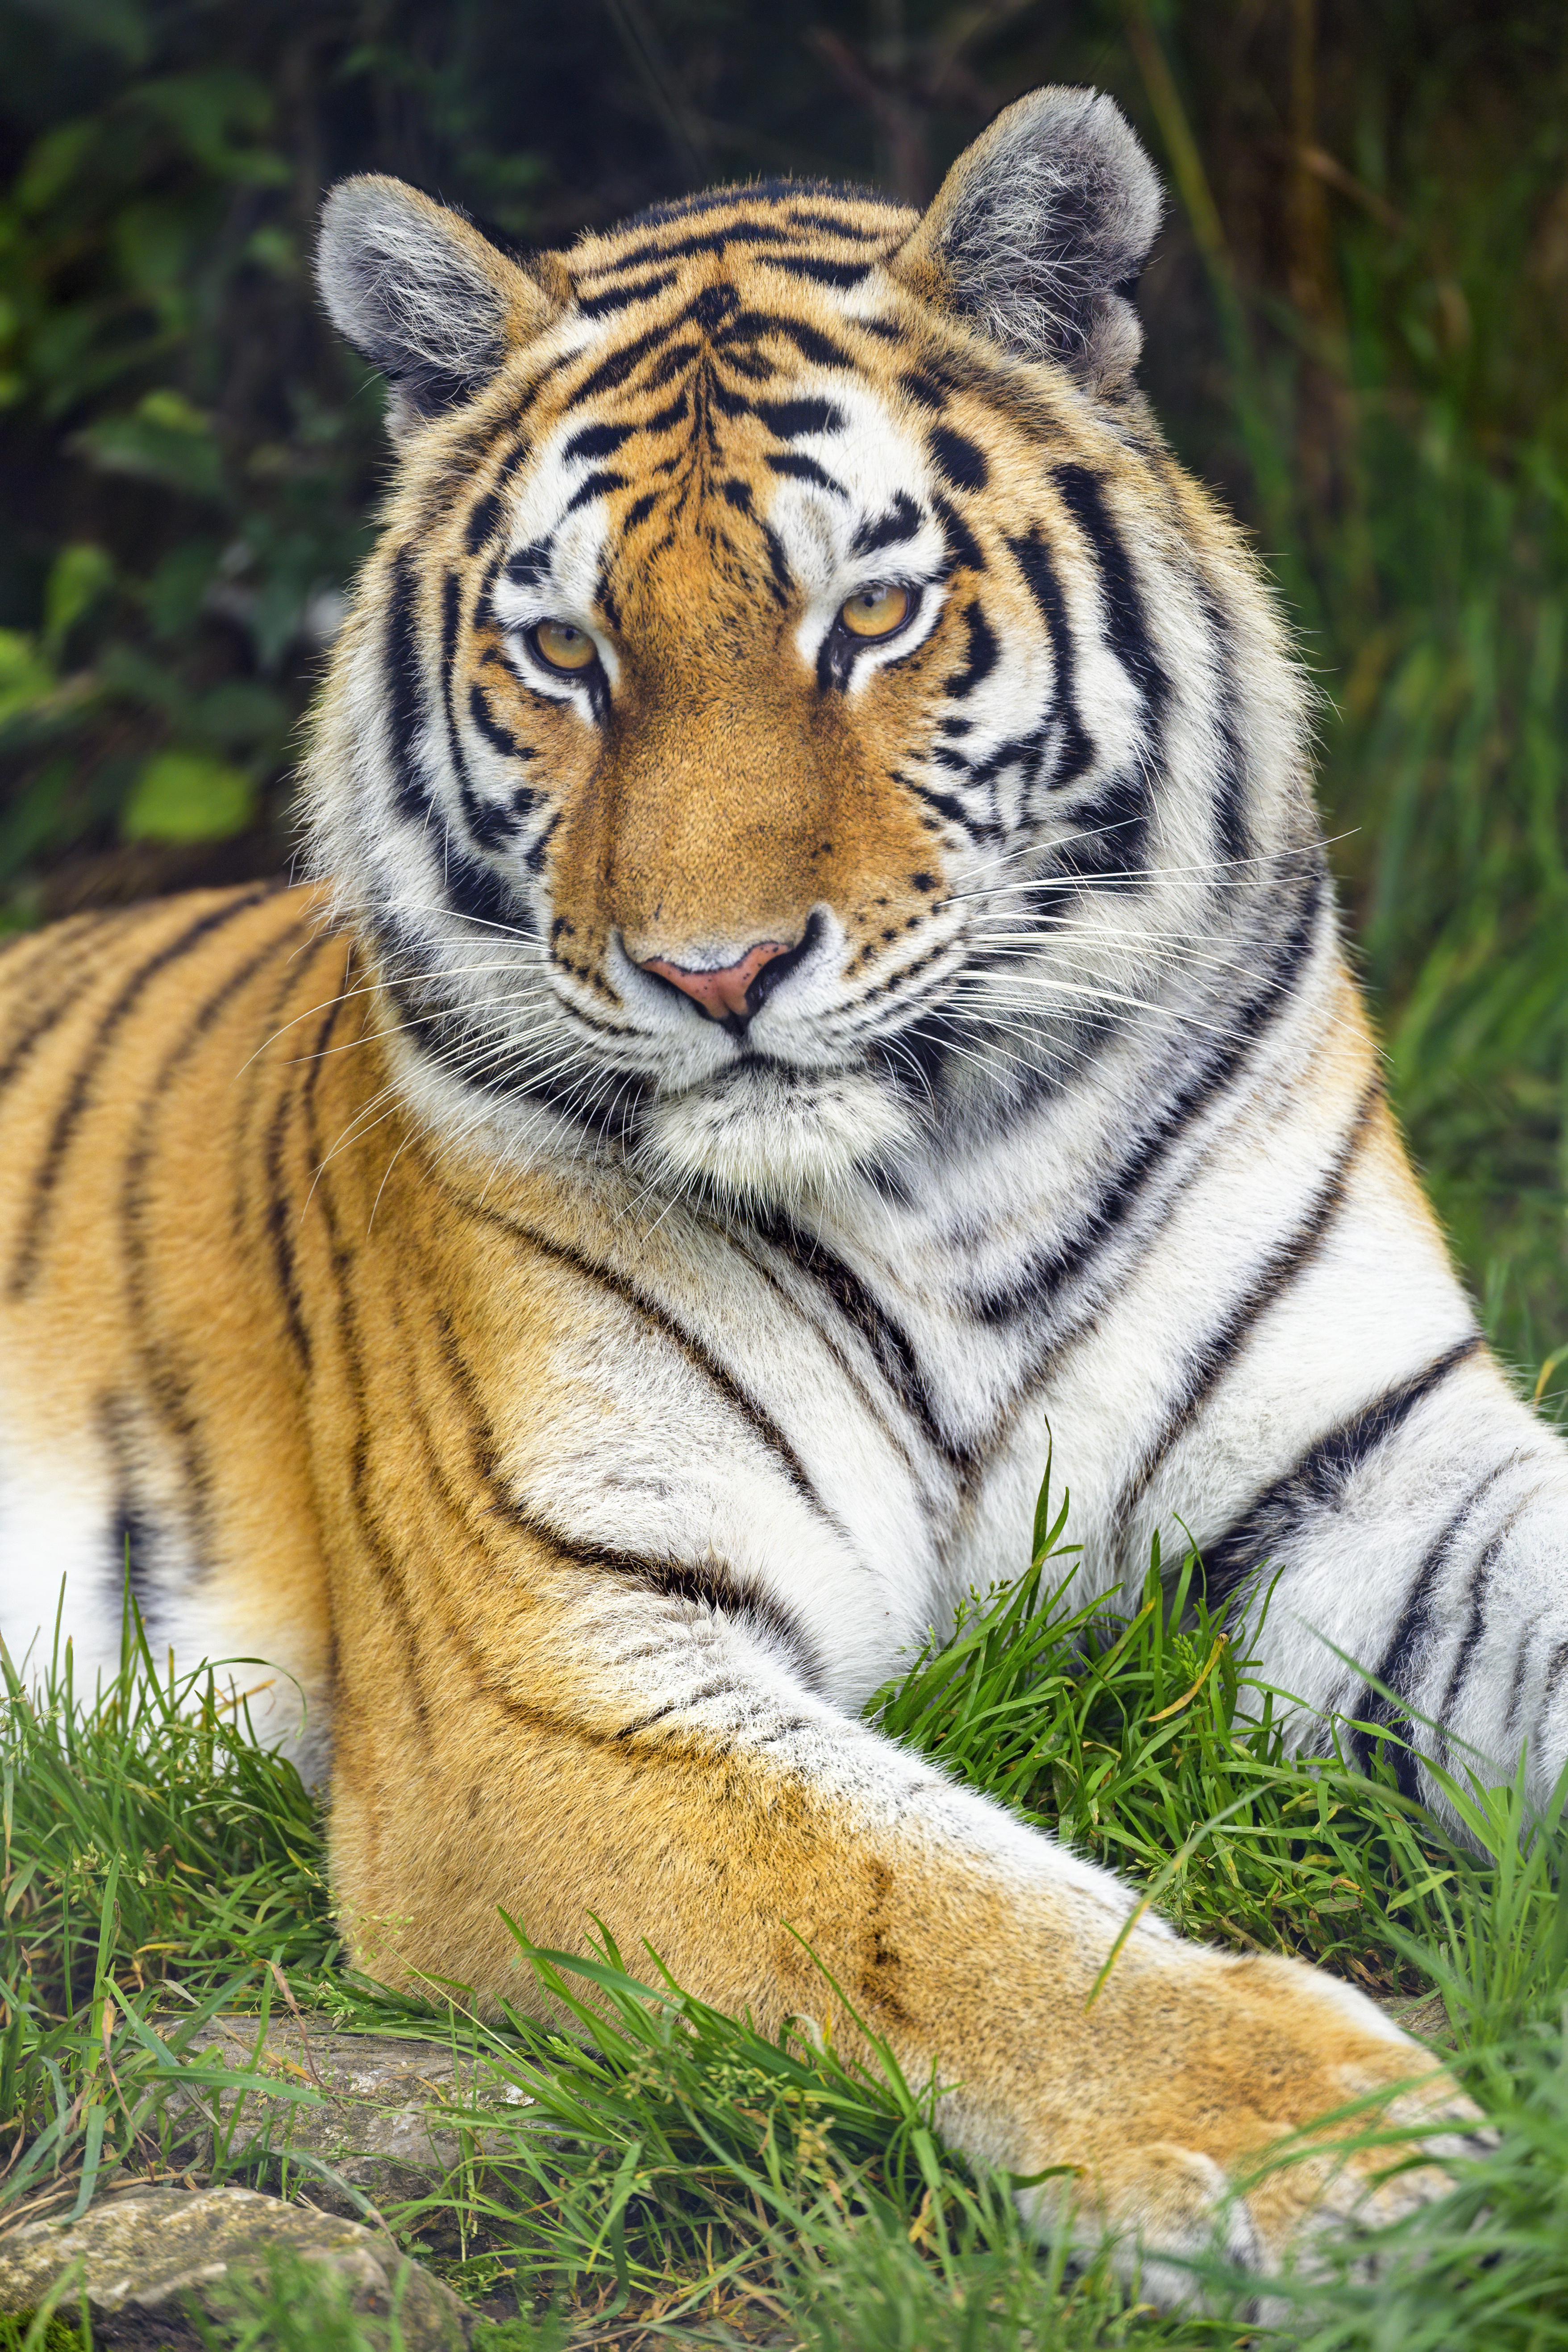 Tiger Predator Glance Animal